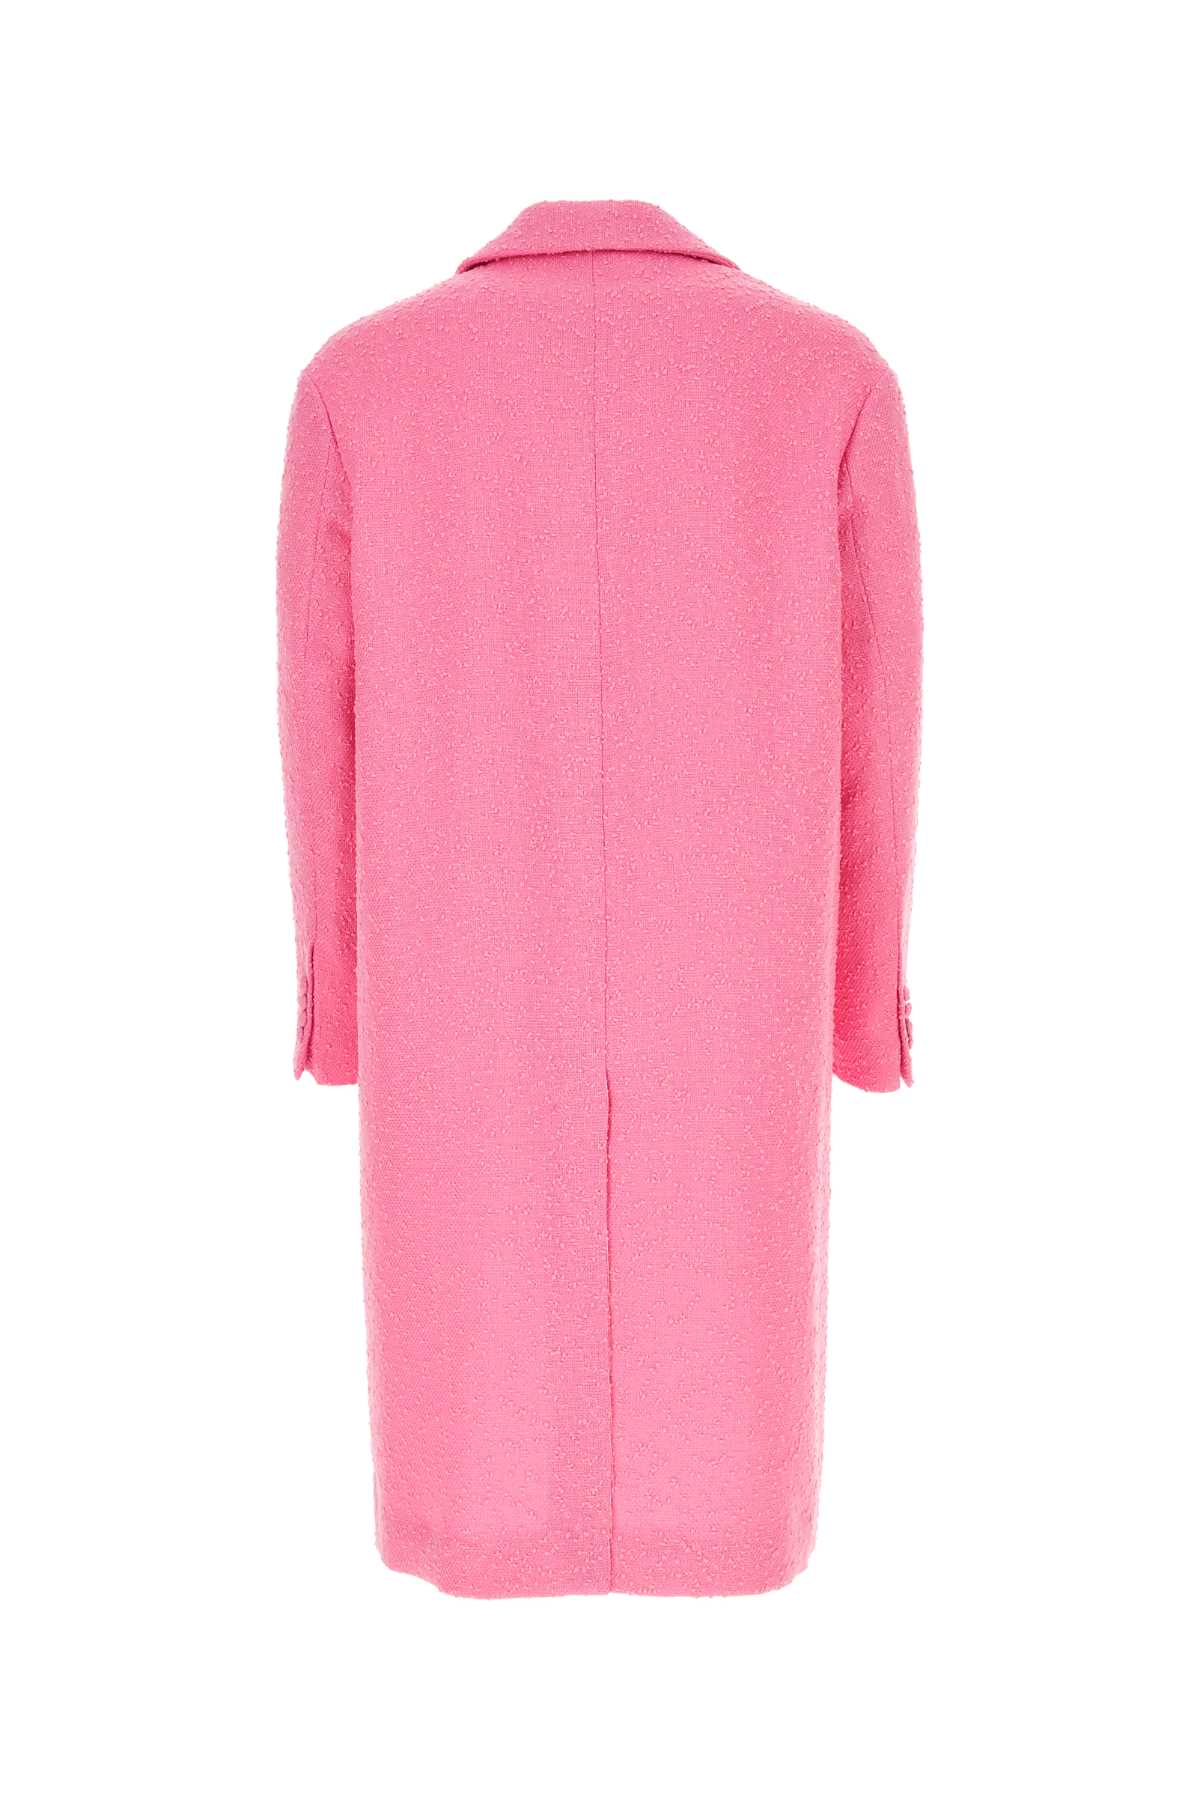 Ami Alexandre Mattiussi Pink Bouclã© Coat In 661